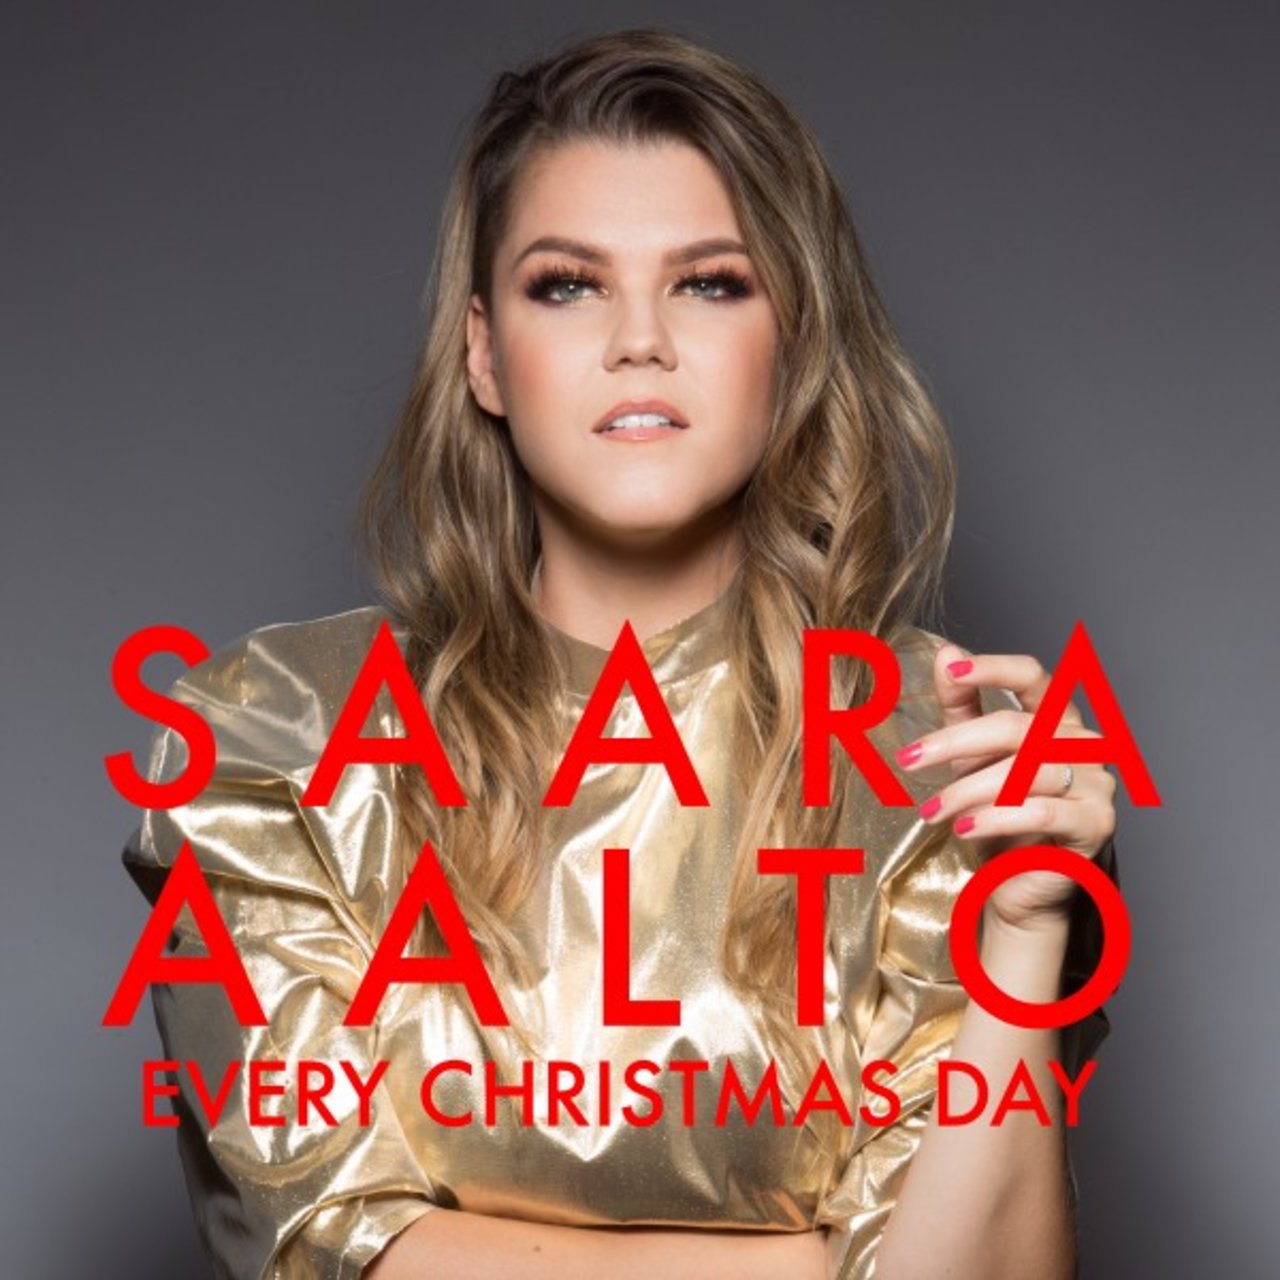 Saara Aalto Every Christmas Day cover artwork